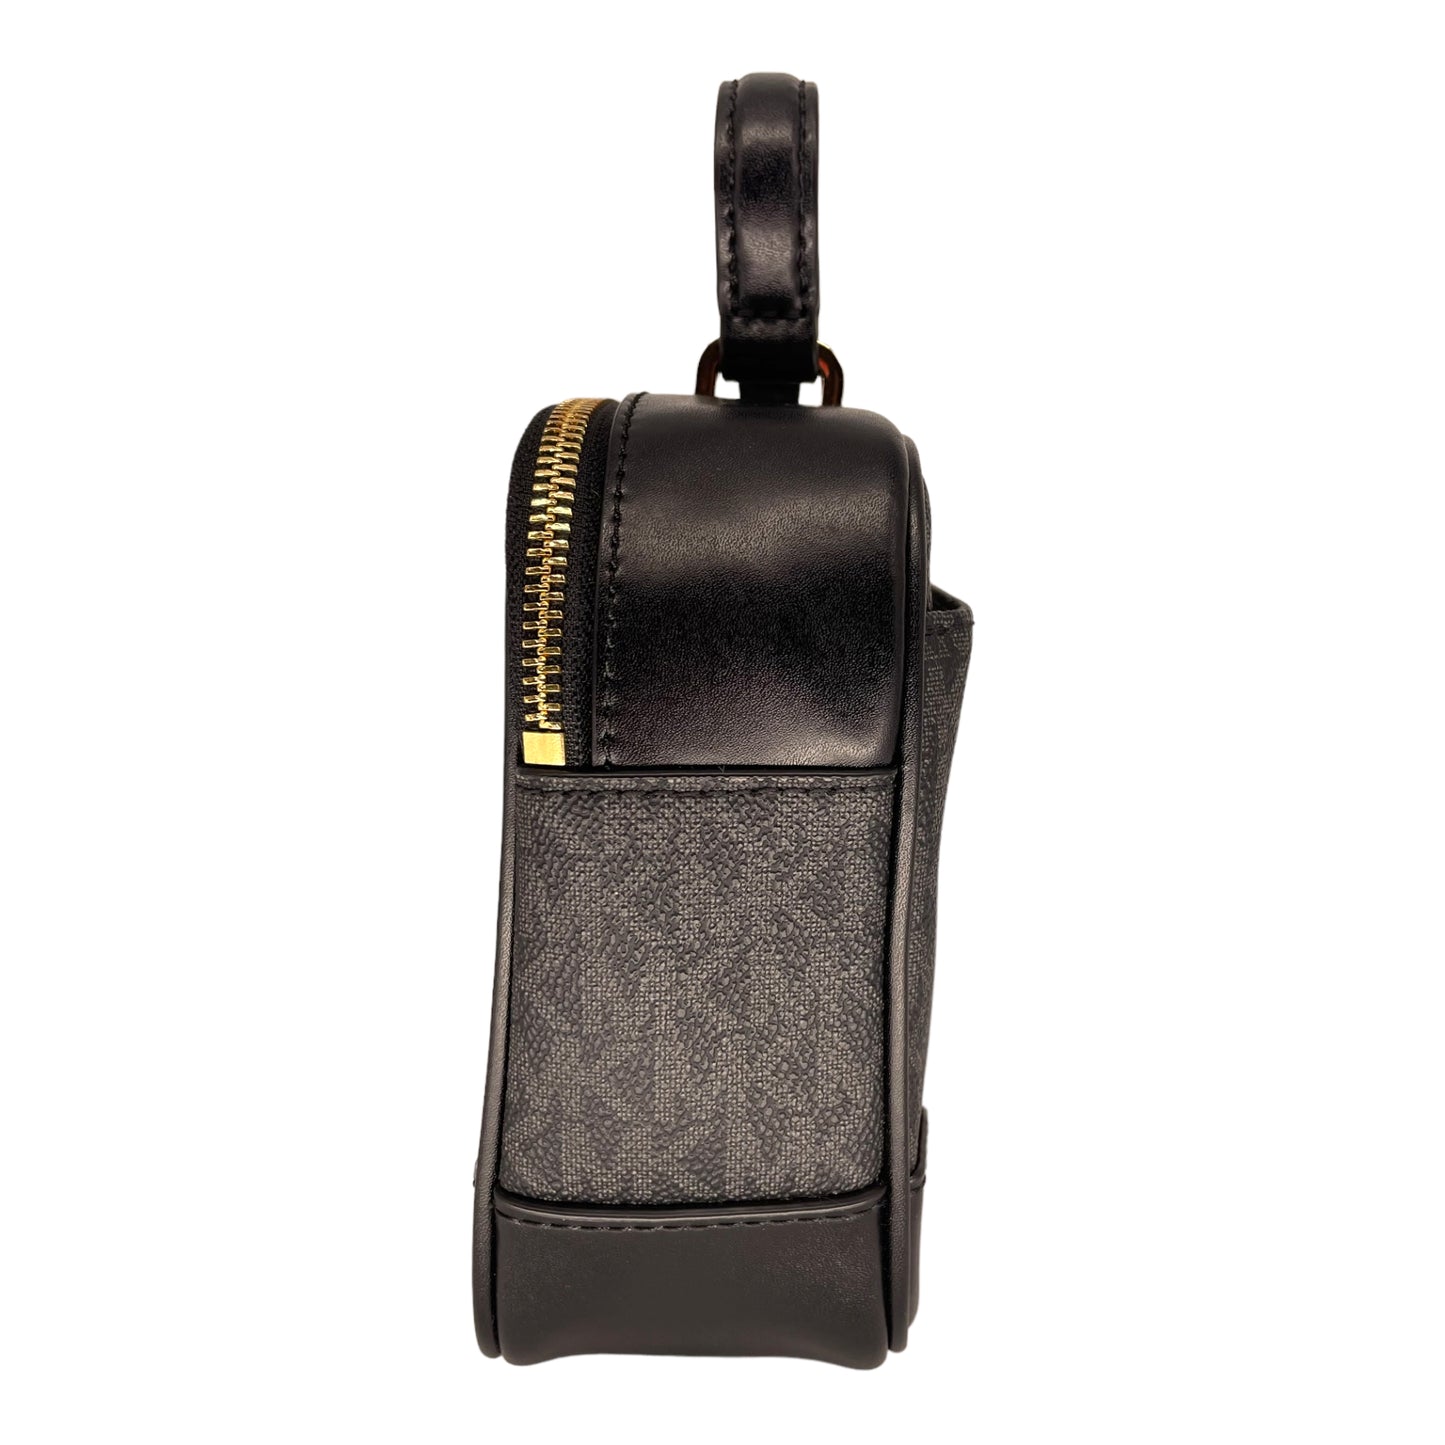 Michael Kors Signature Black Patent Leather Camera Bag